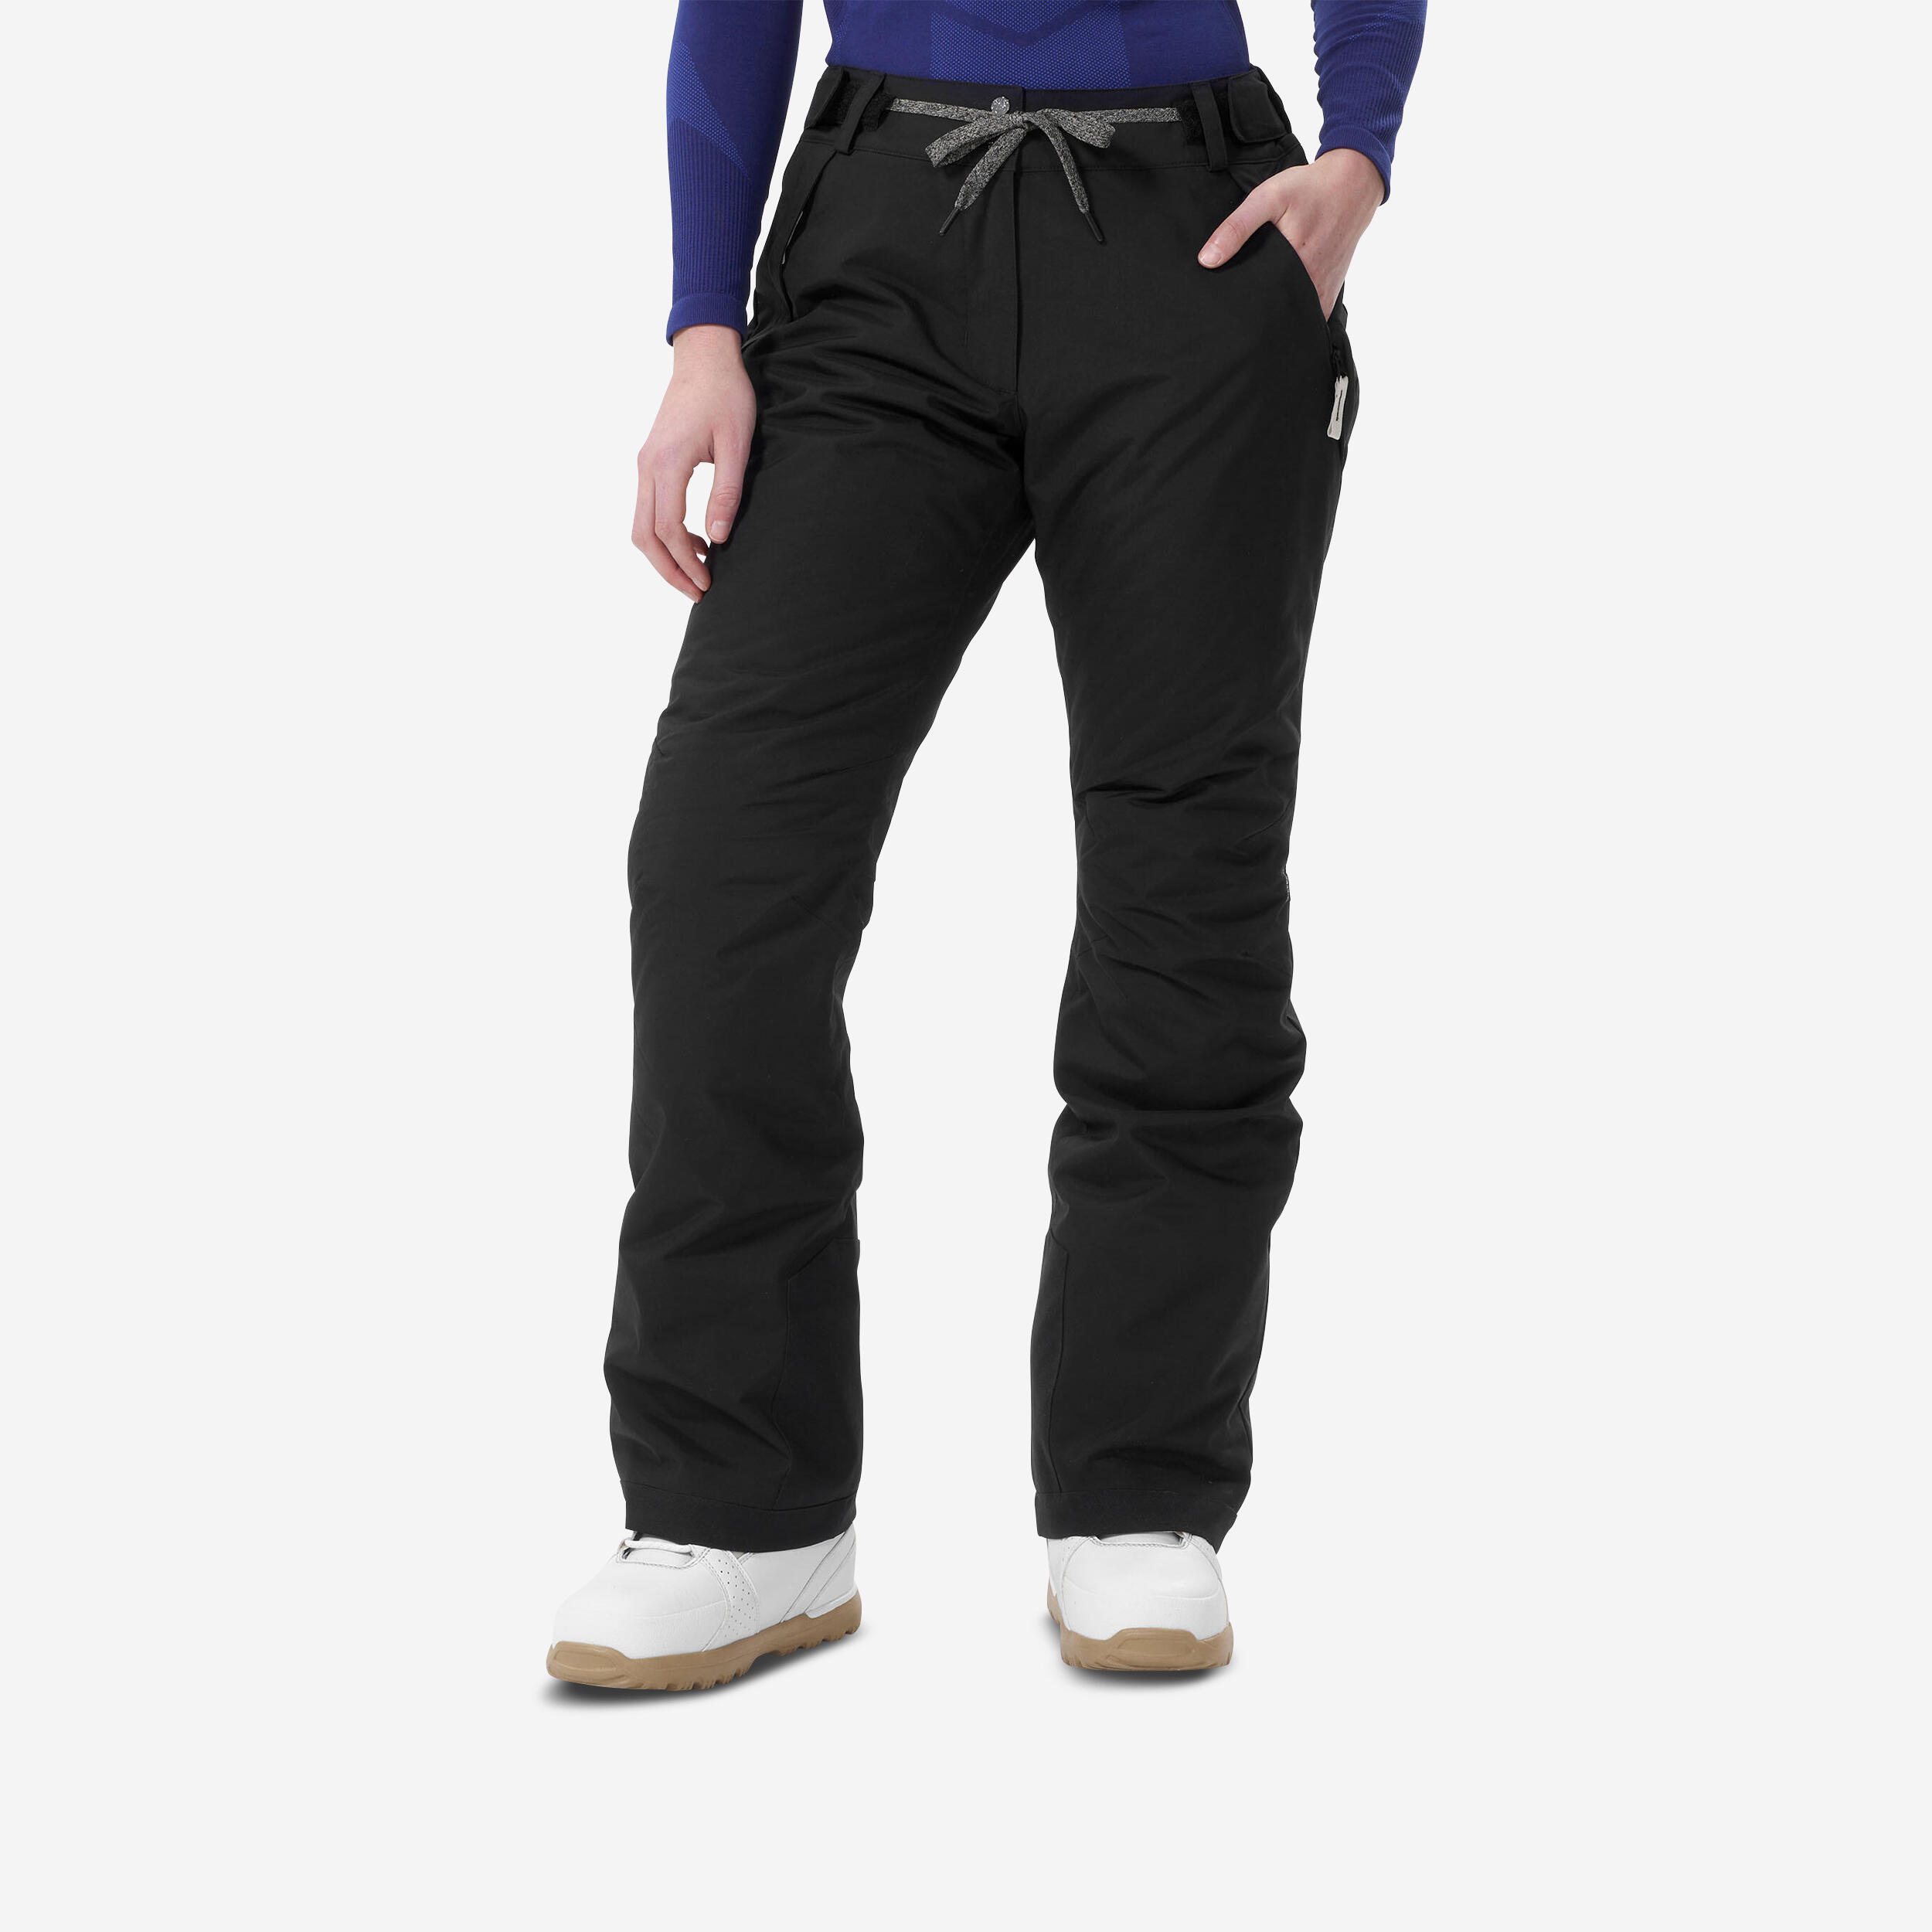 Women's Warm Pants - SH 500 Black - Carbon grey - Quechua